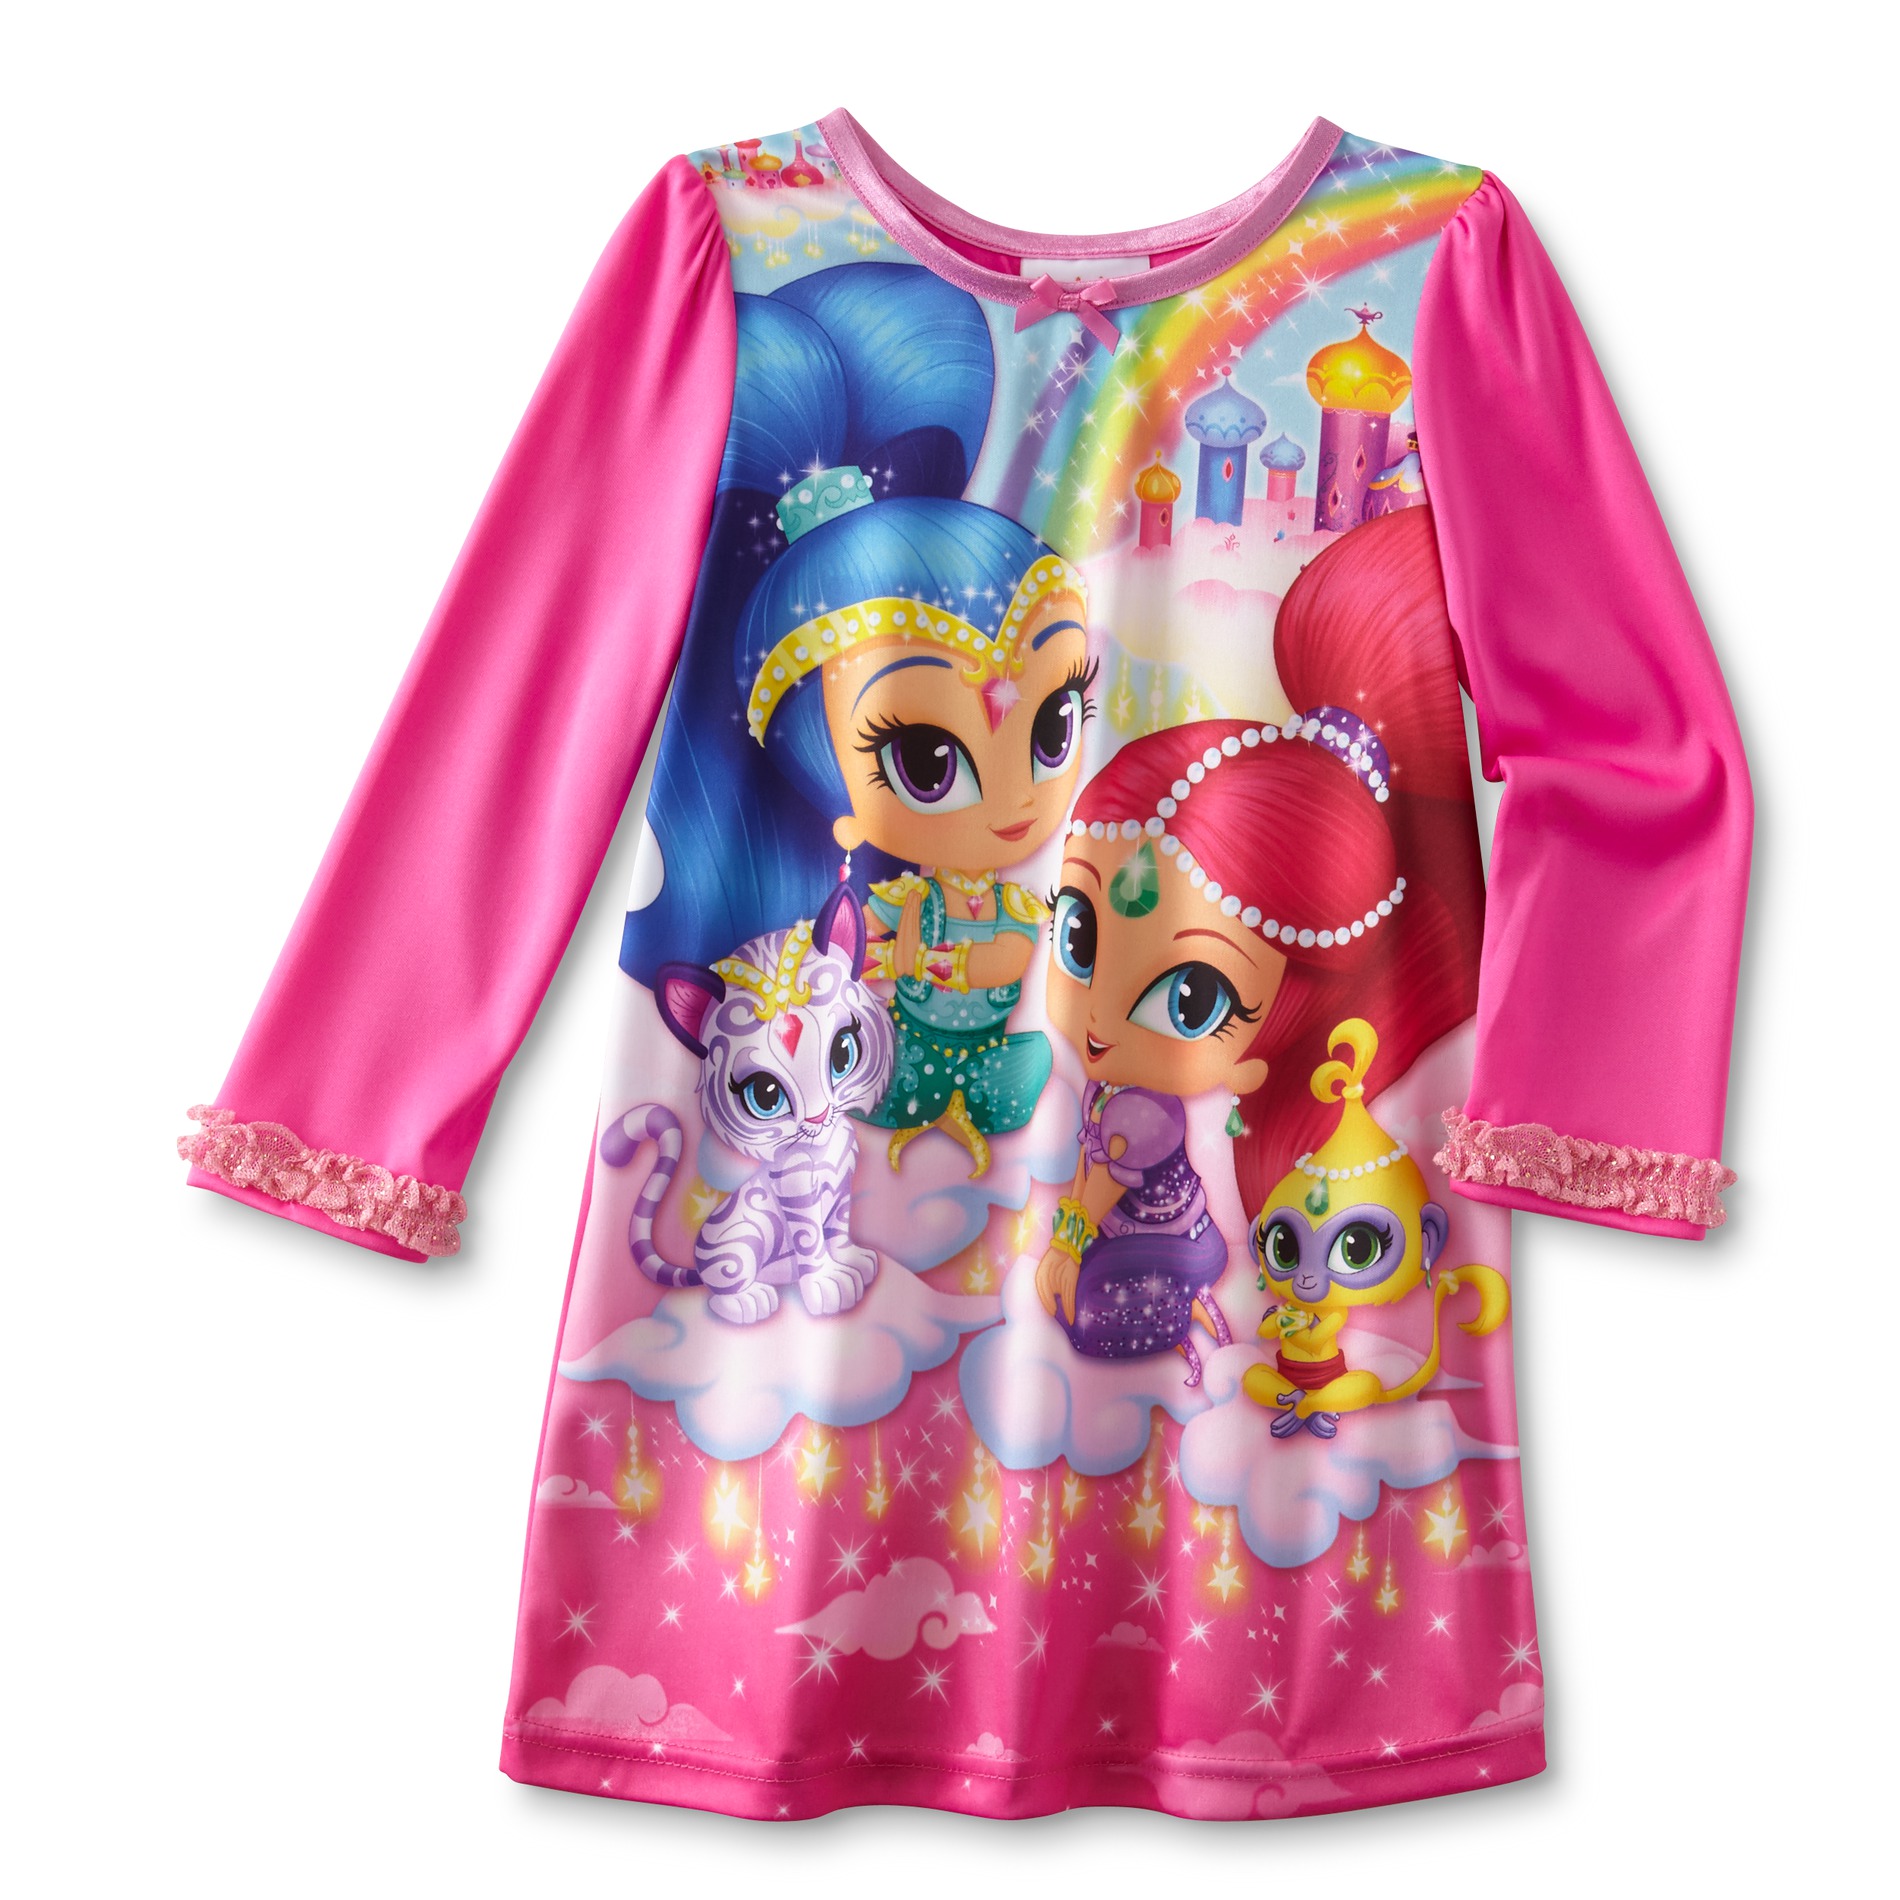 Nickelodeon Shimmer & Shine Toddler Girl's Nightgown